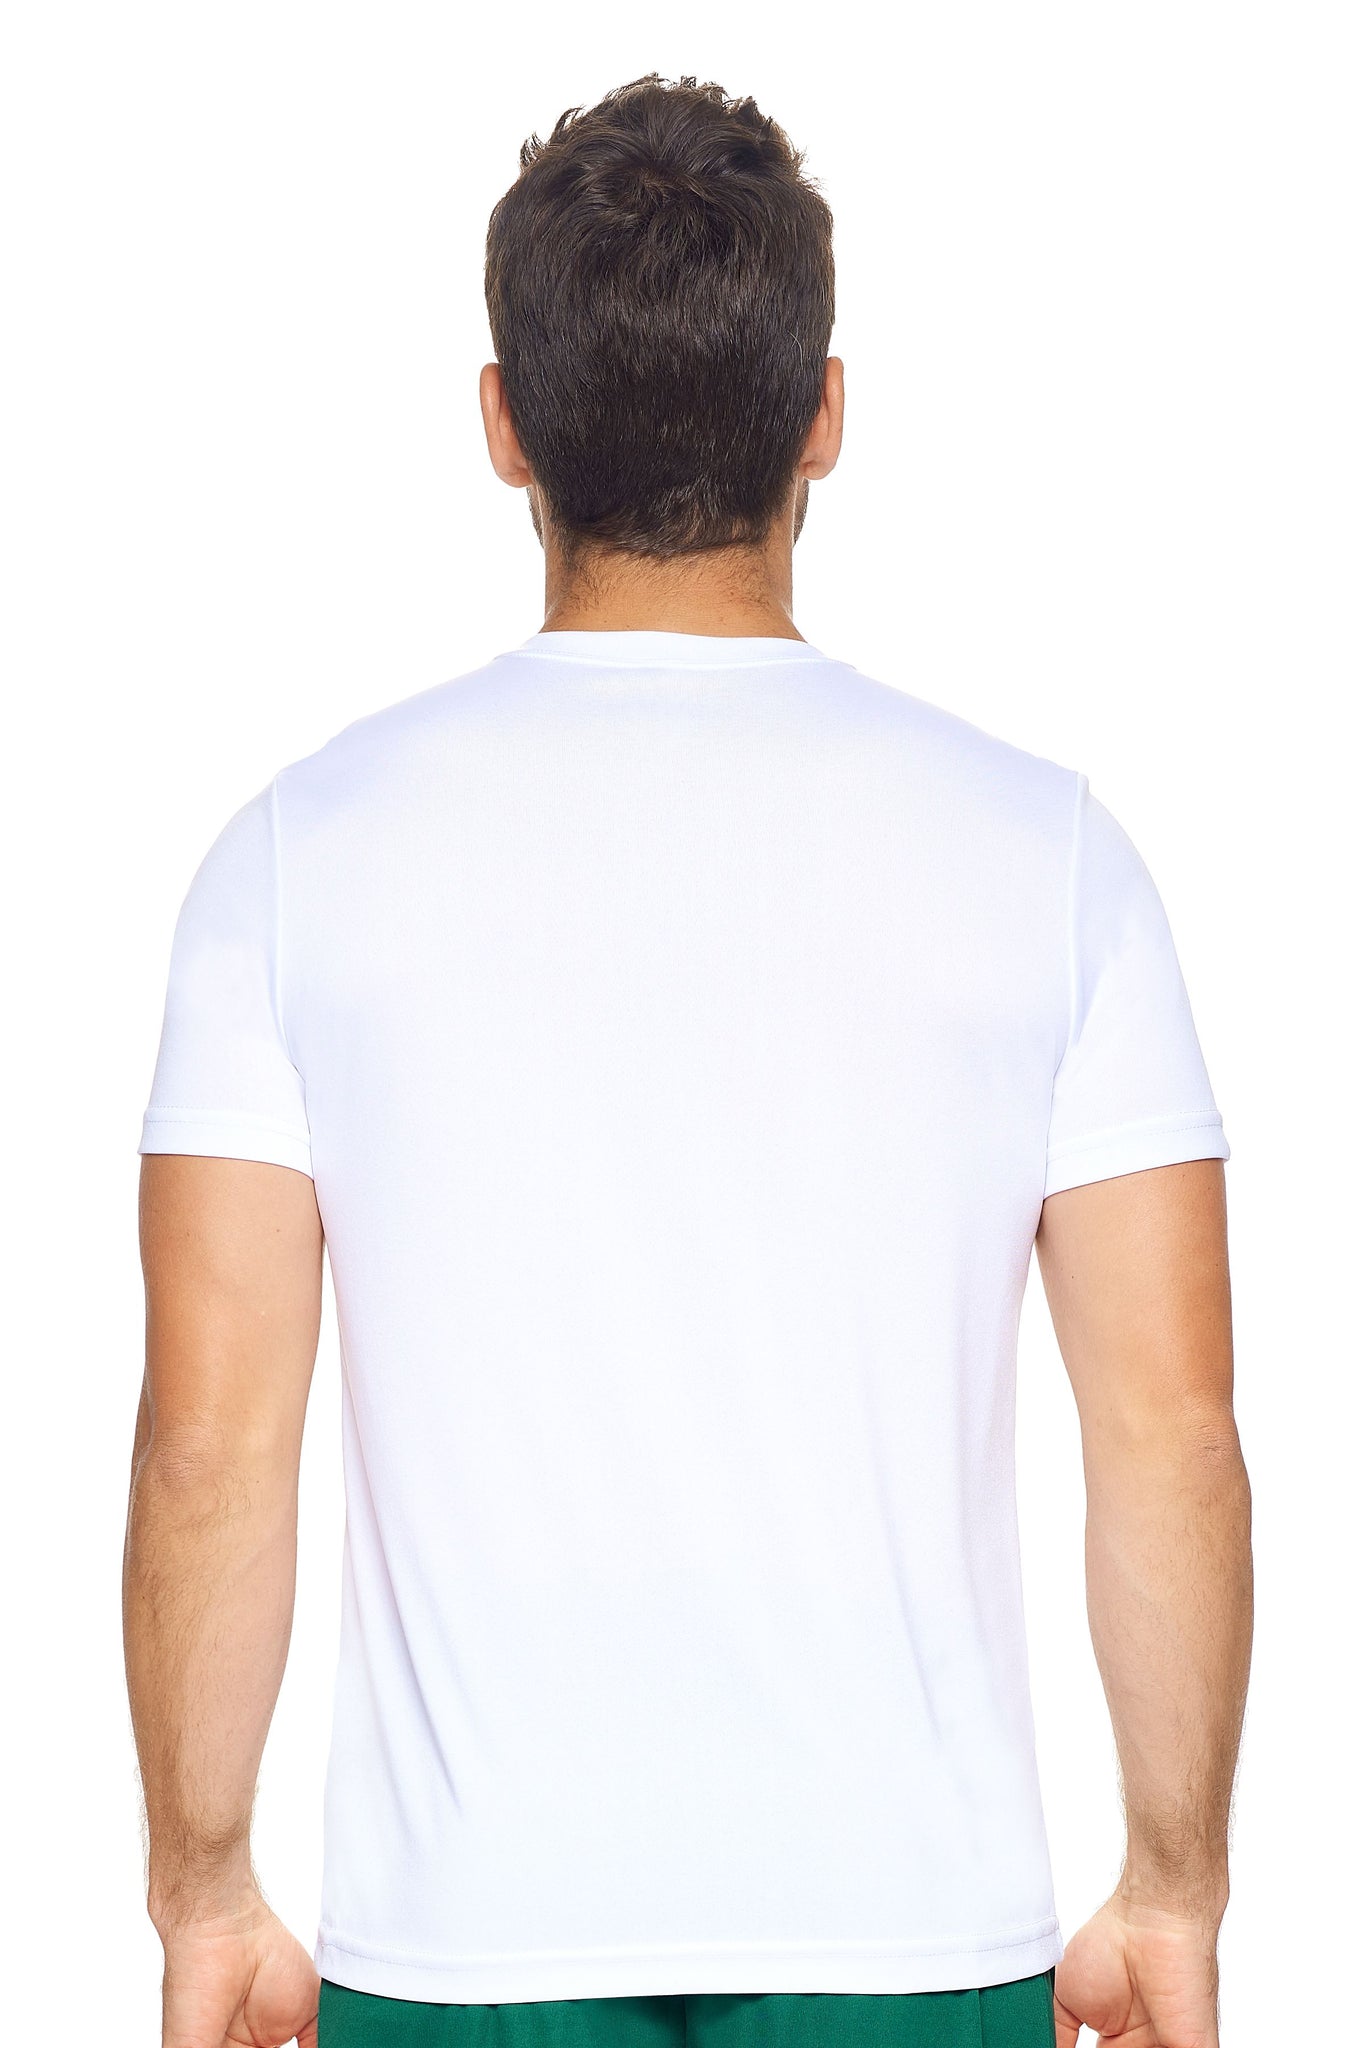 Expert Brand Wholesale Super Soft Eco-Friendly Performance Apparel Fashion Sportswear Men's Crewneck T-Shirt Made in USA white 3#white